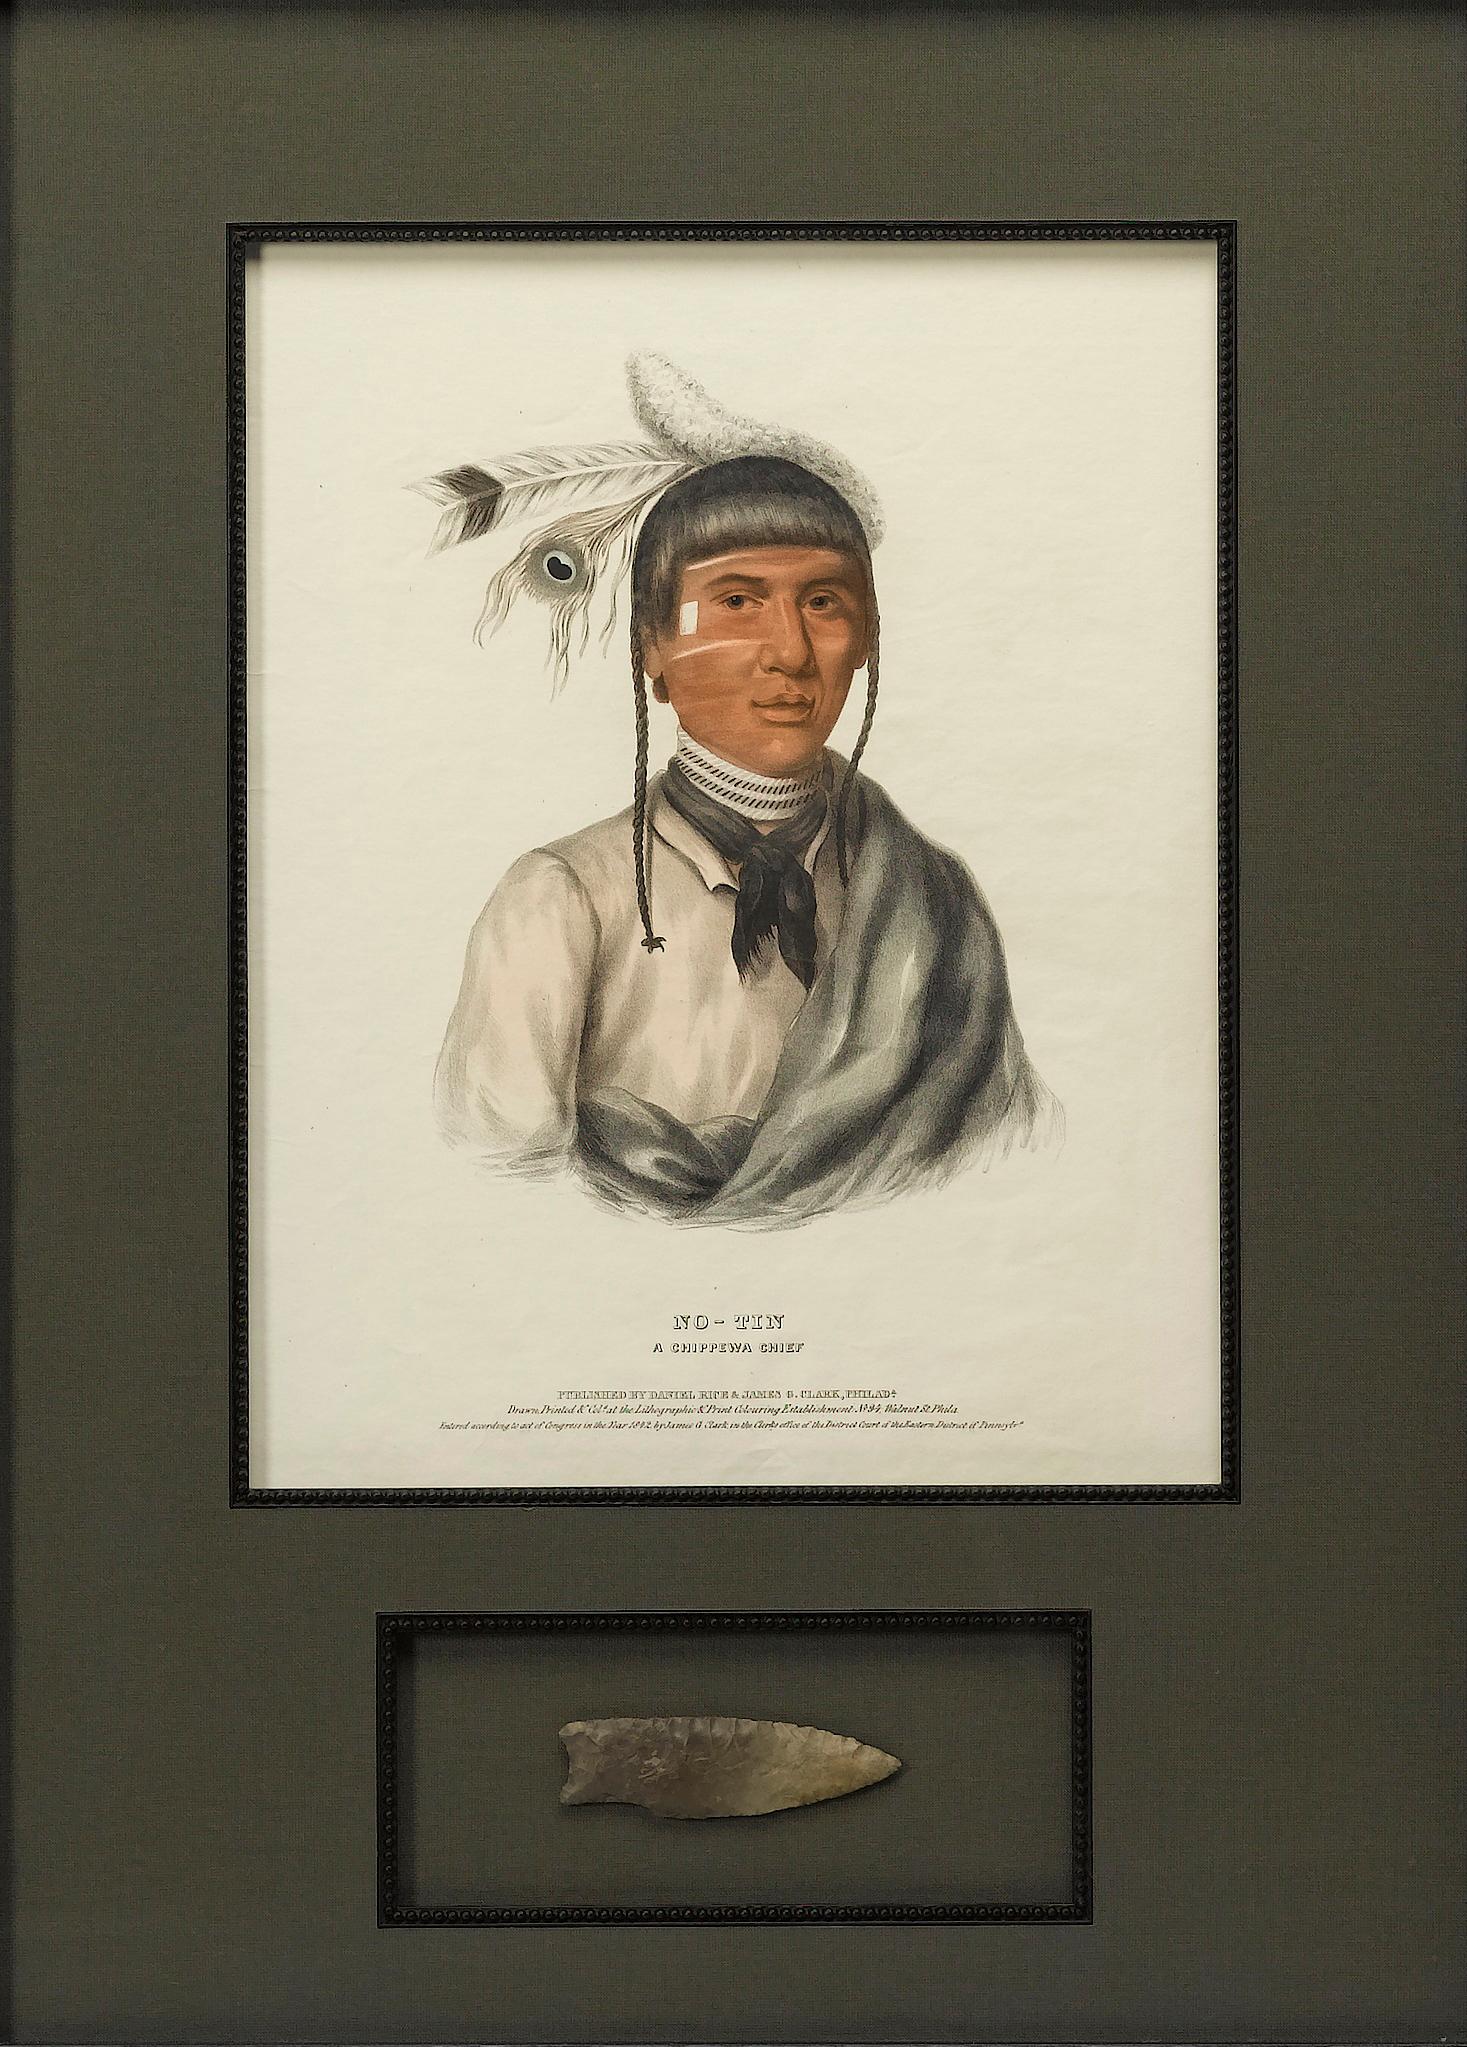 American No-Tin, A Chippewa Chief Hand-Colored Lithograph and Antique Arrowhe, circa 1838